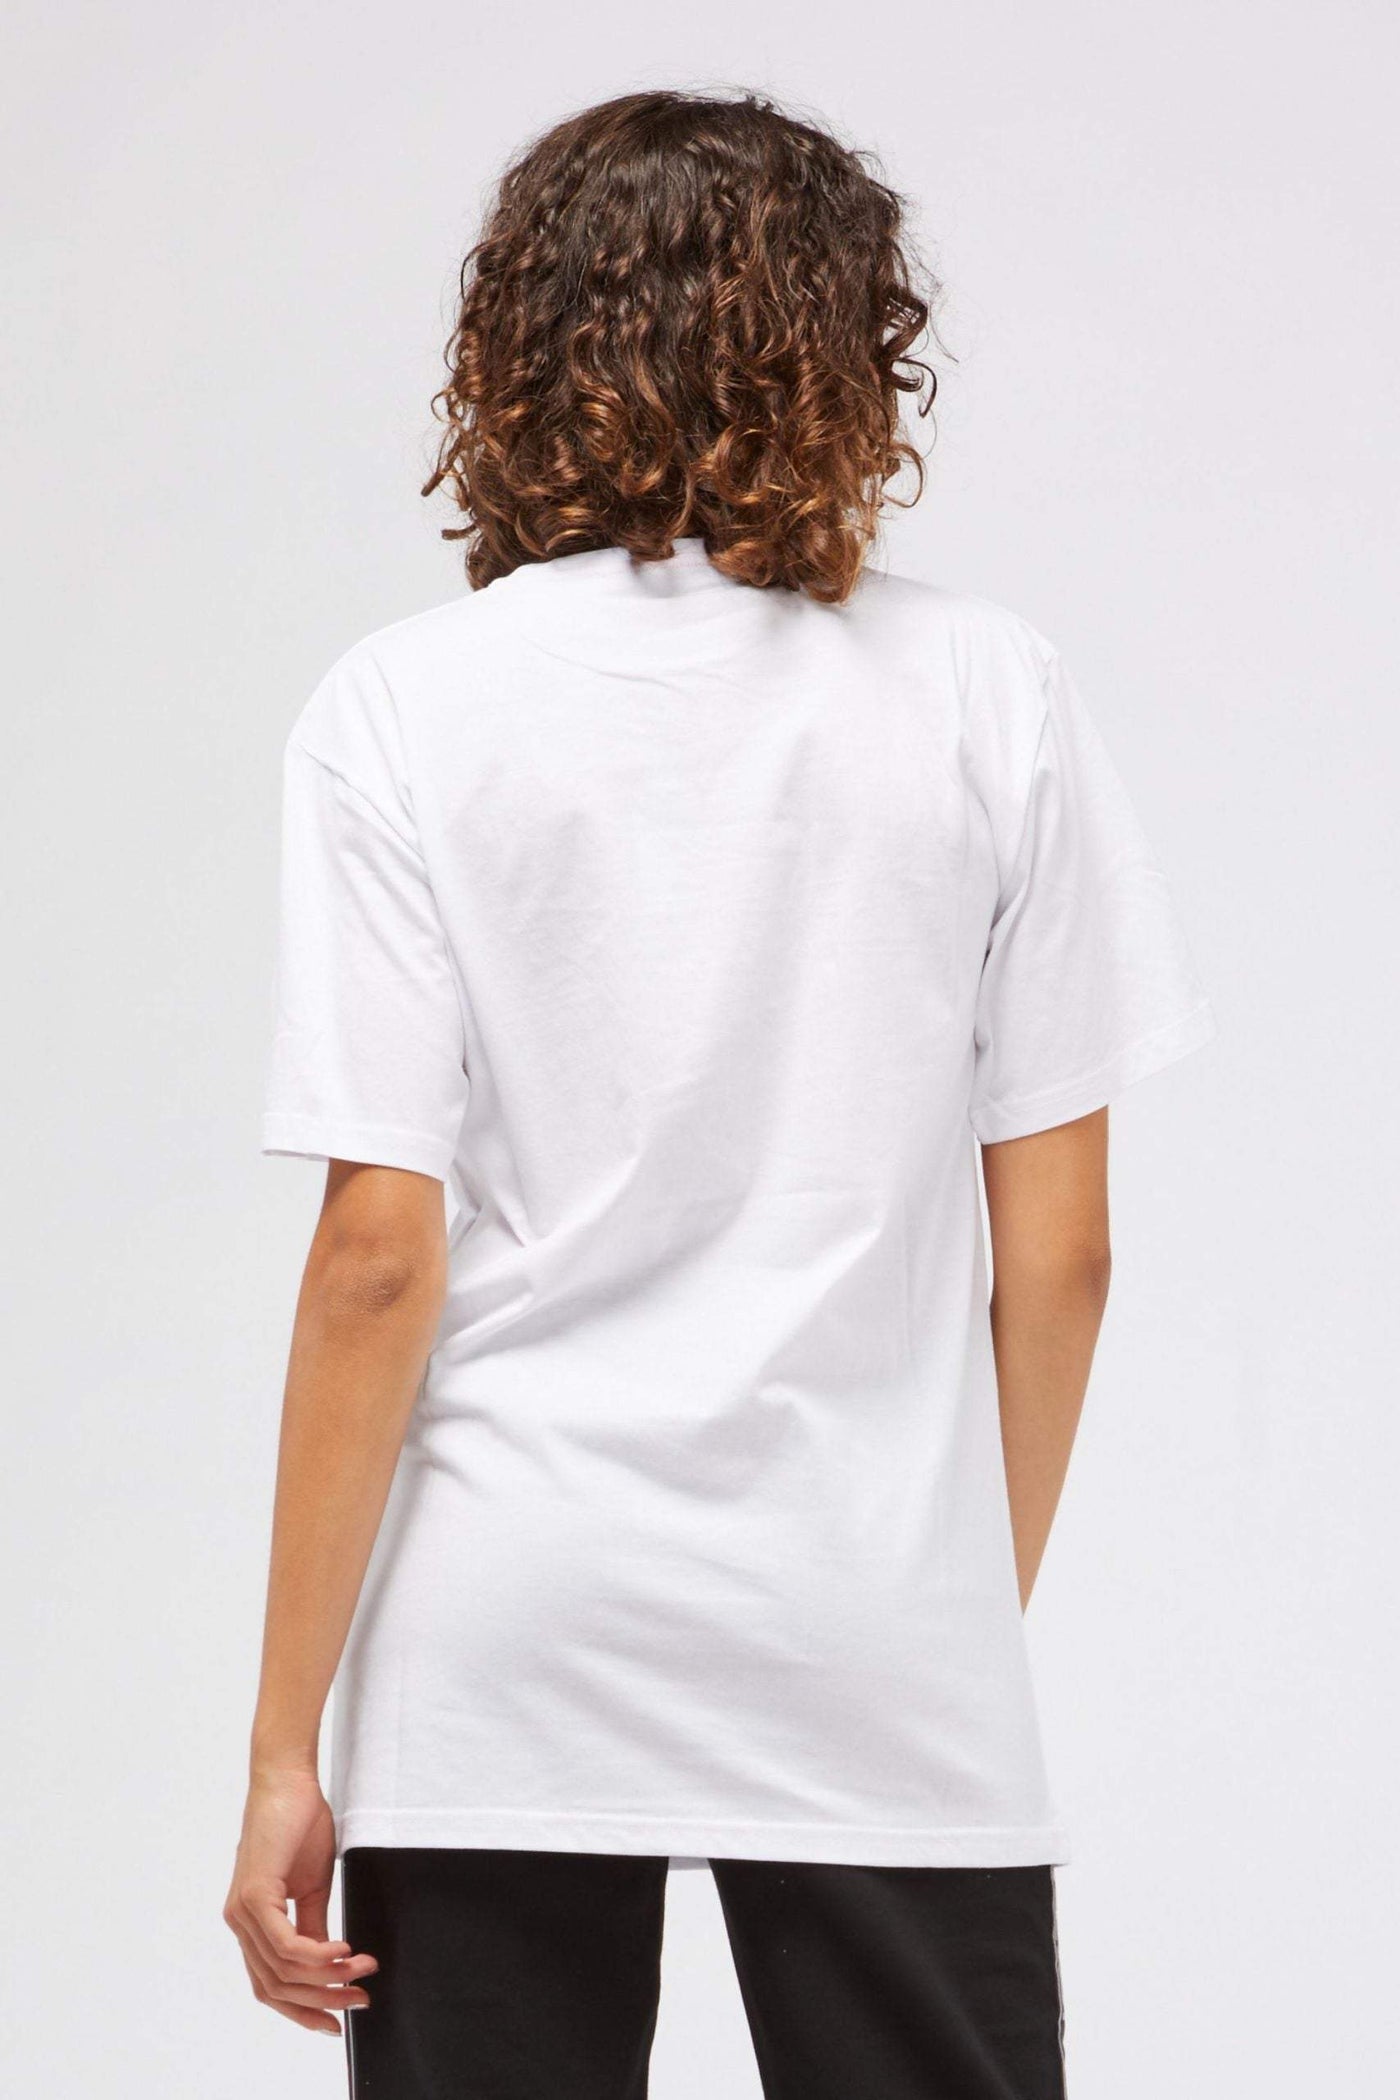 Custo Barcelona White Cotton Tops & T-Shirt Custo Barcelona, feed-1, L, M, S, Tops & T-Shirts - Women - Clothing, White, XS at SEYMAYKA